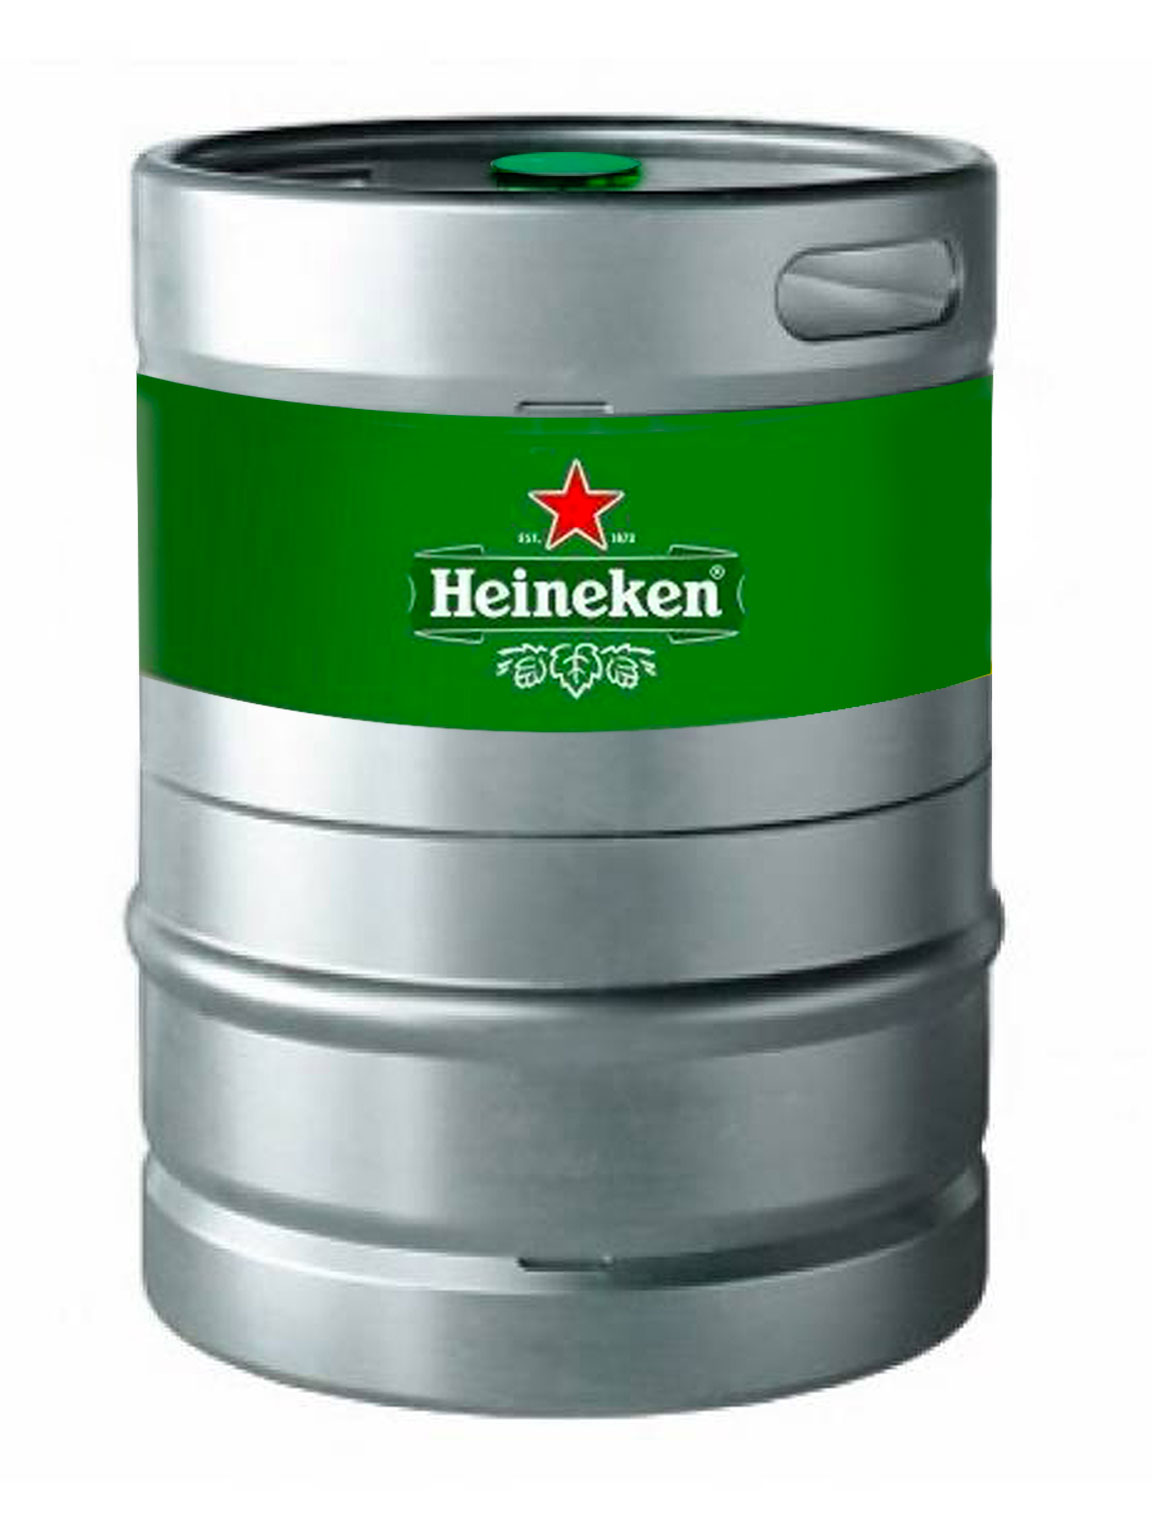 Heineken-groot-50L-1152×1536